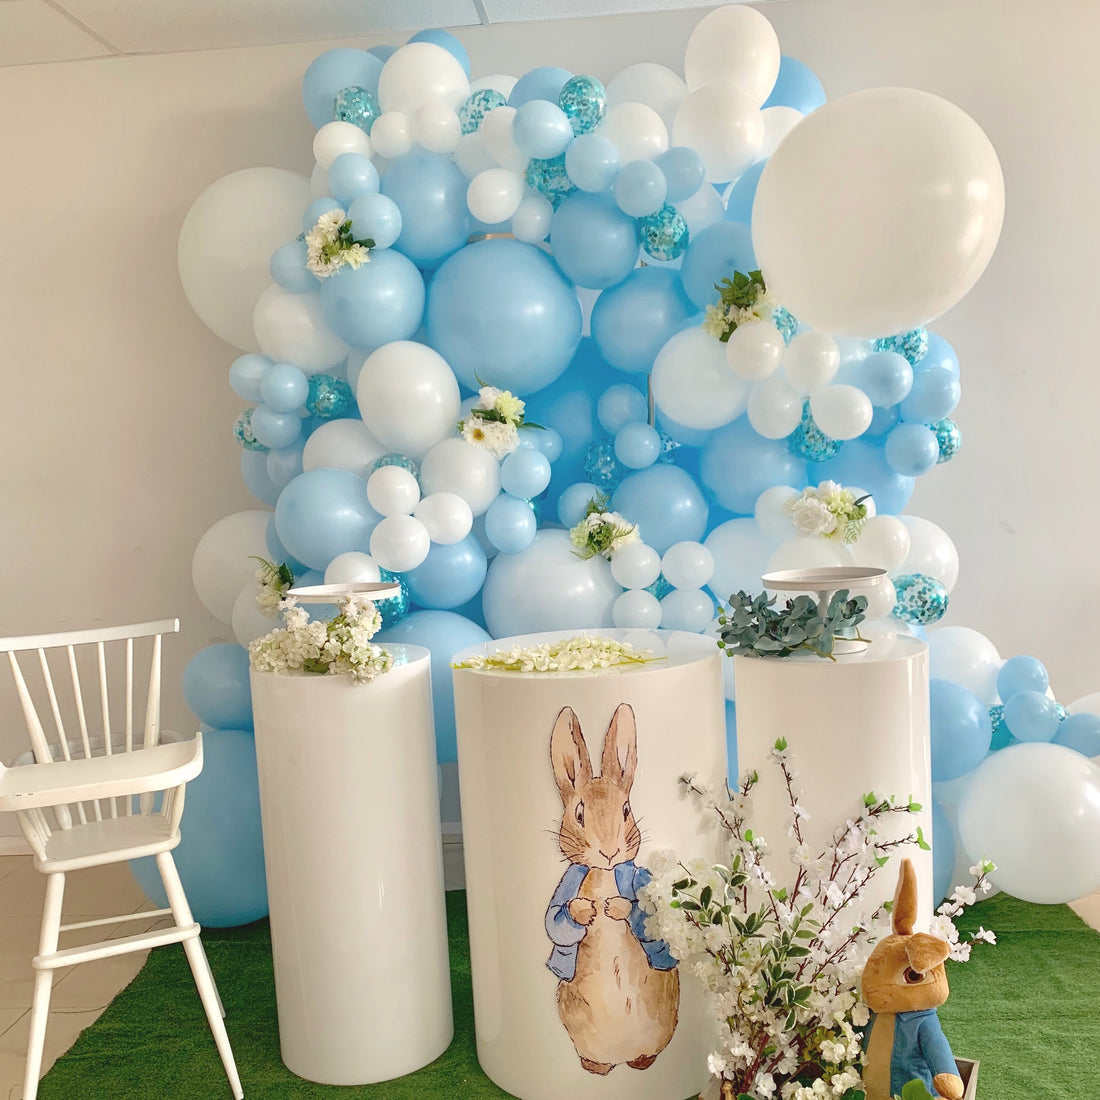 Peter Rabbit Themes Birthday Party